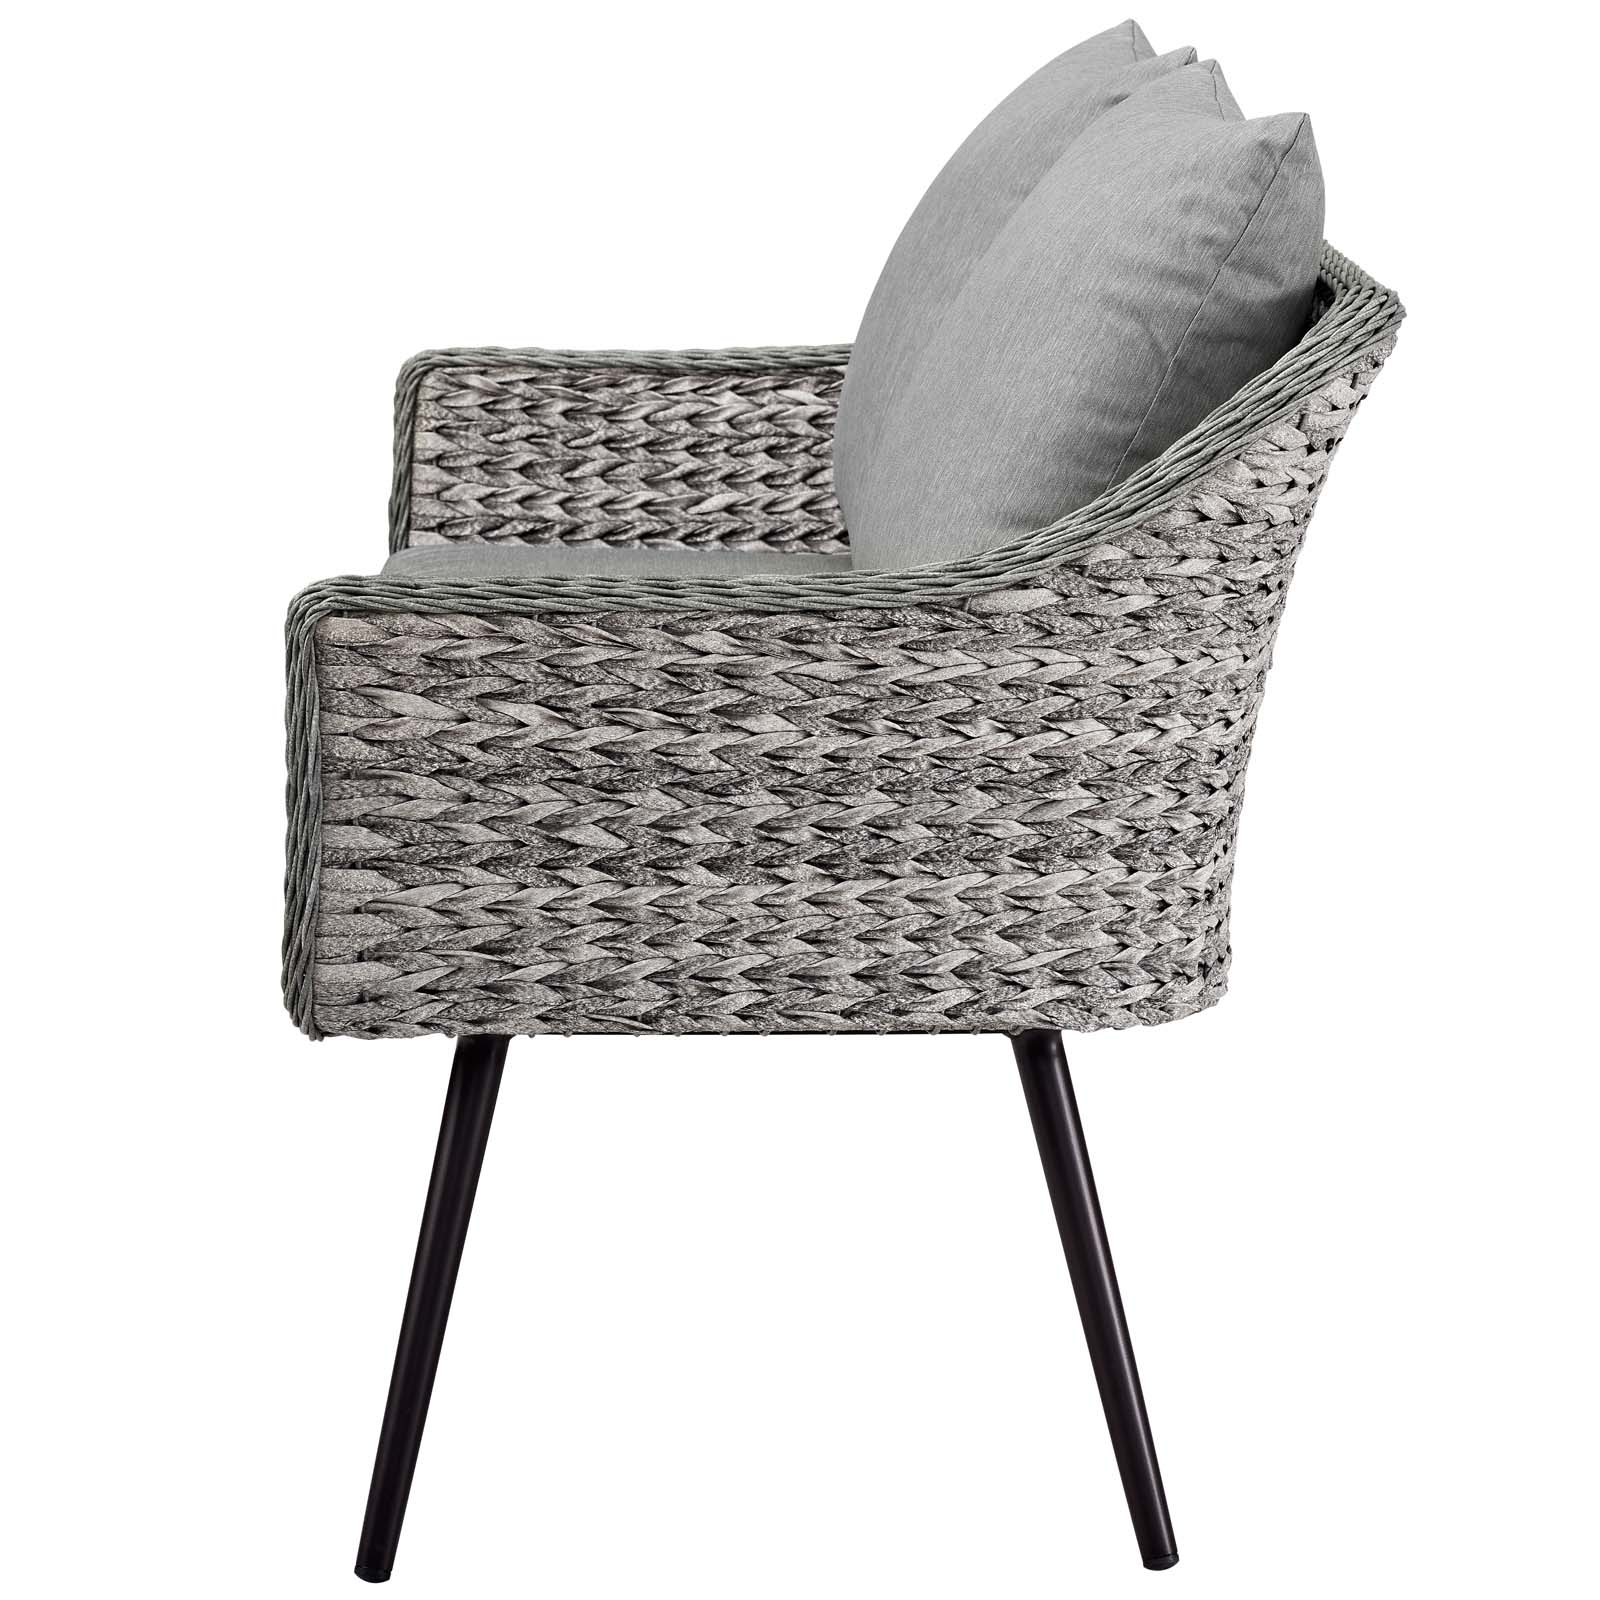 Contemporary Modern Urban Designer Outdoor Patio Balcony Garden Furniture Lounge Sofa, Chair and Coffee Table Set, Aluminum Fabric Wicker Rattan, Grey Gray - image 4 of 9